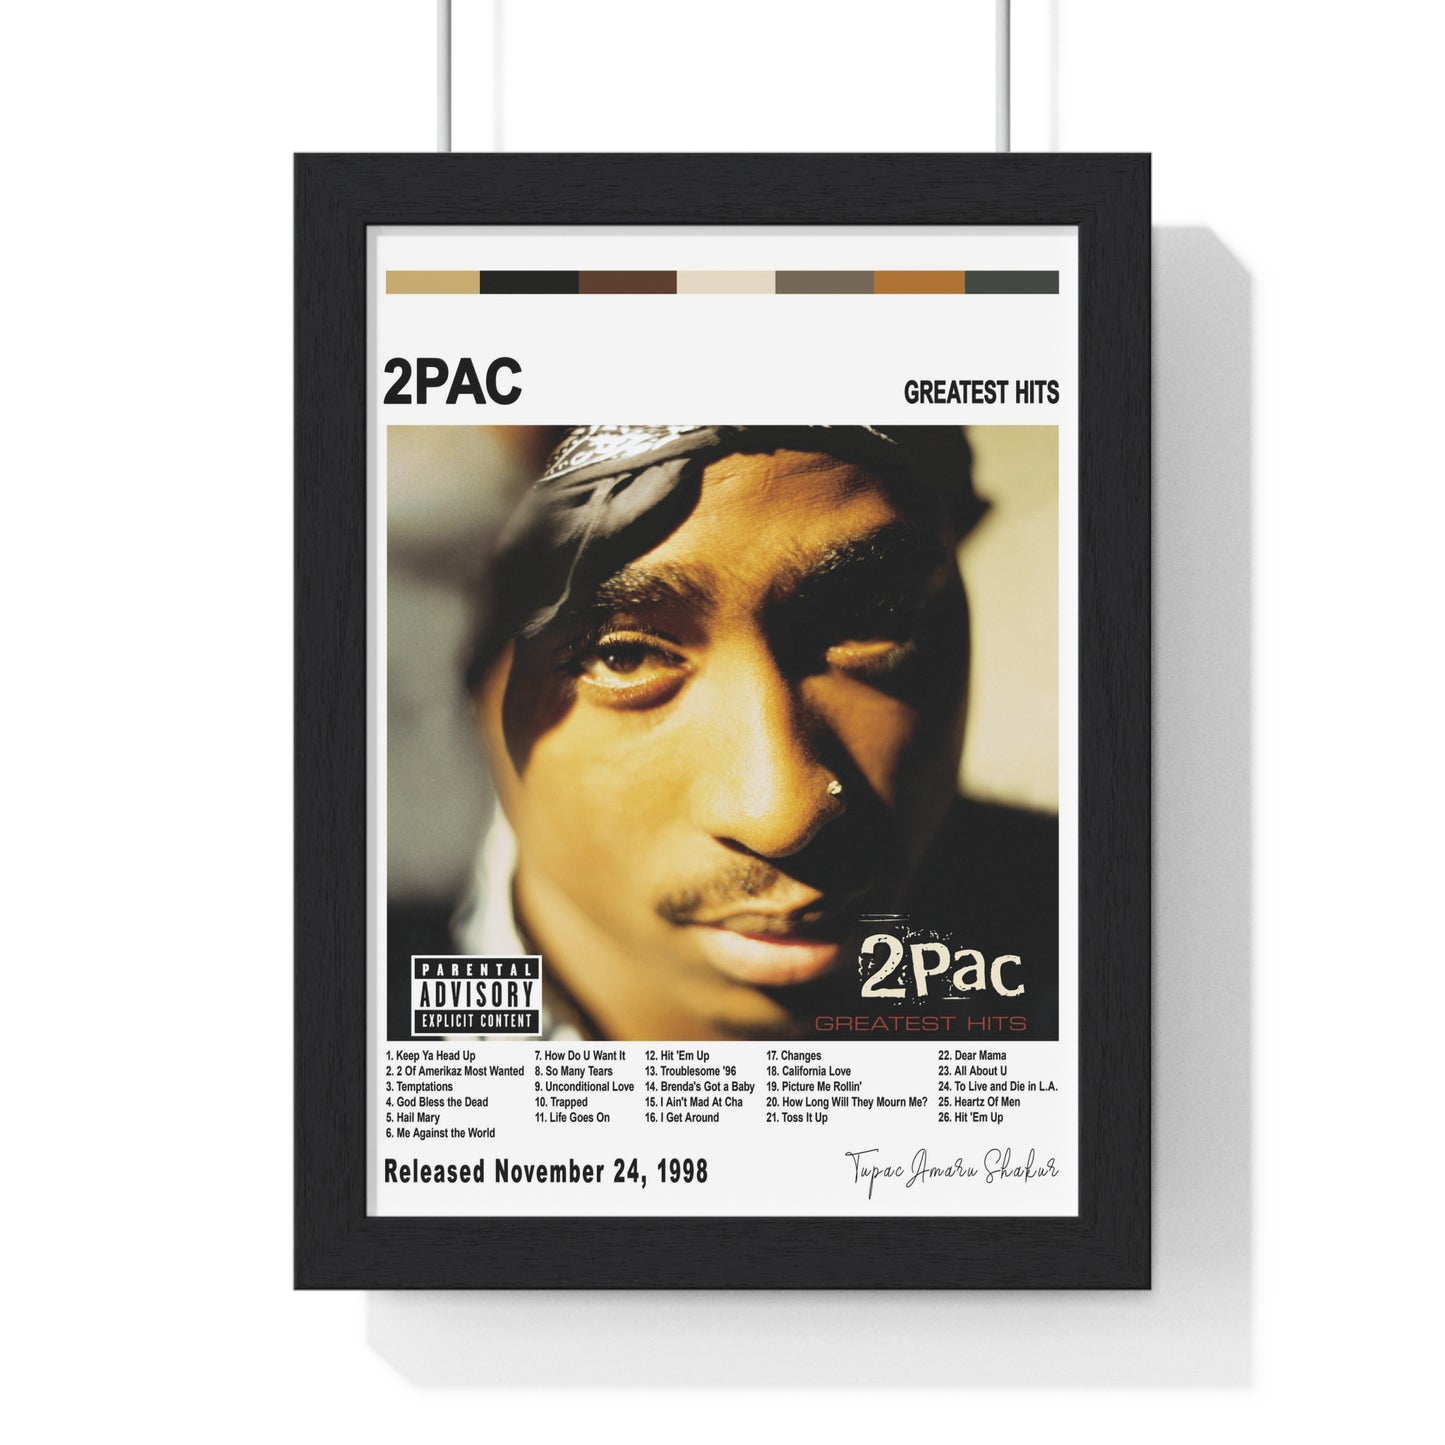 2PAC - Tupac Album Cover Poster